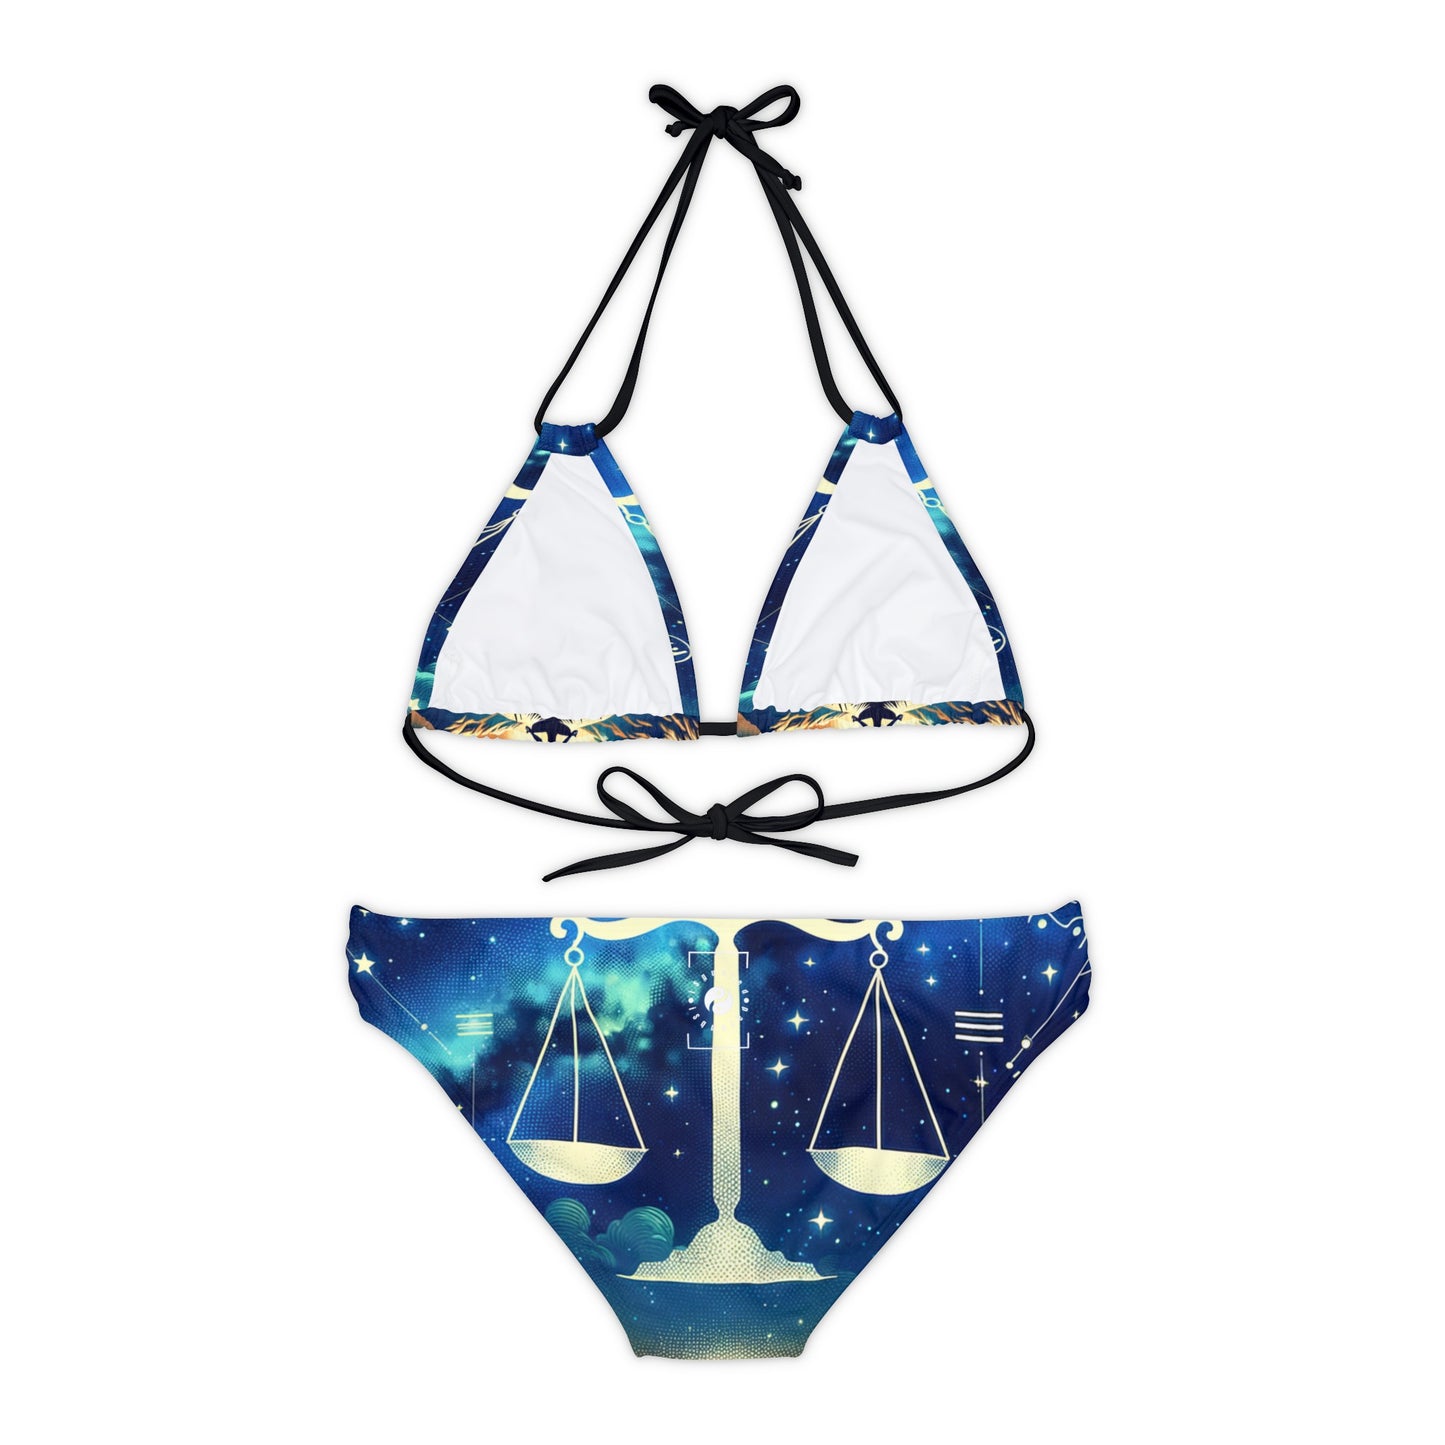 Celestial Libra - Lace-up Bikini Set